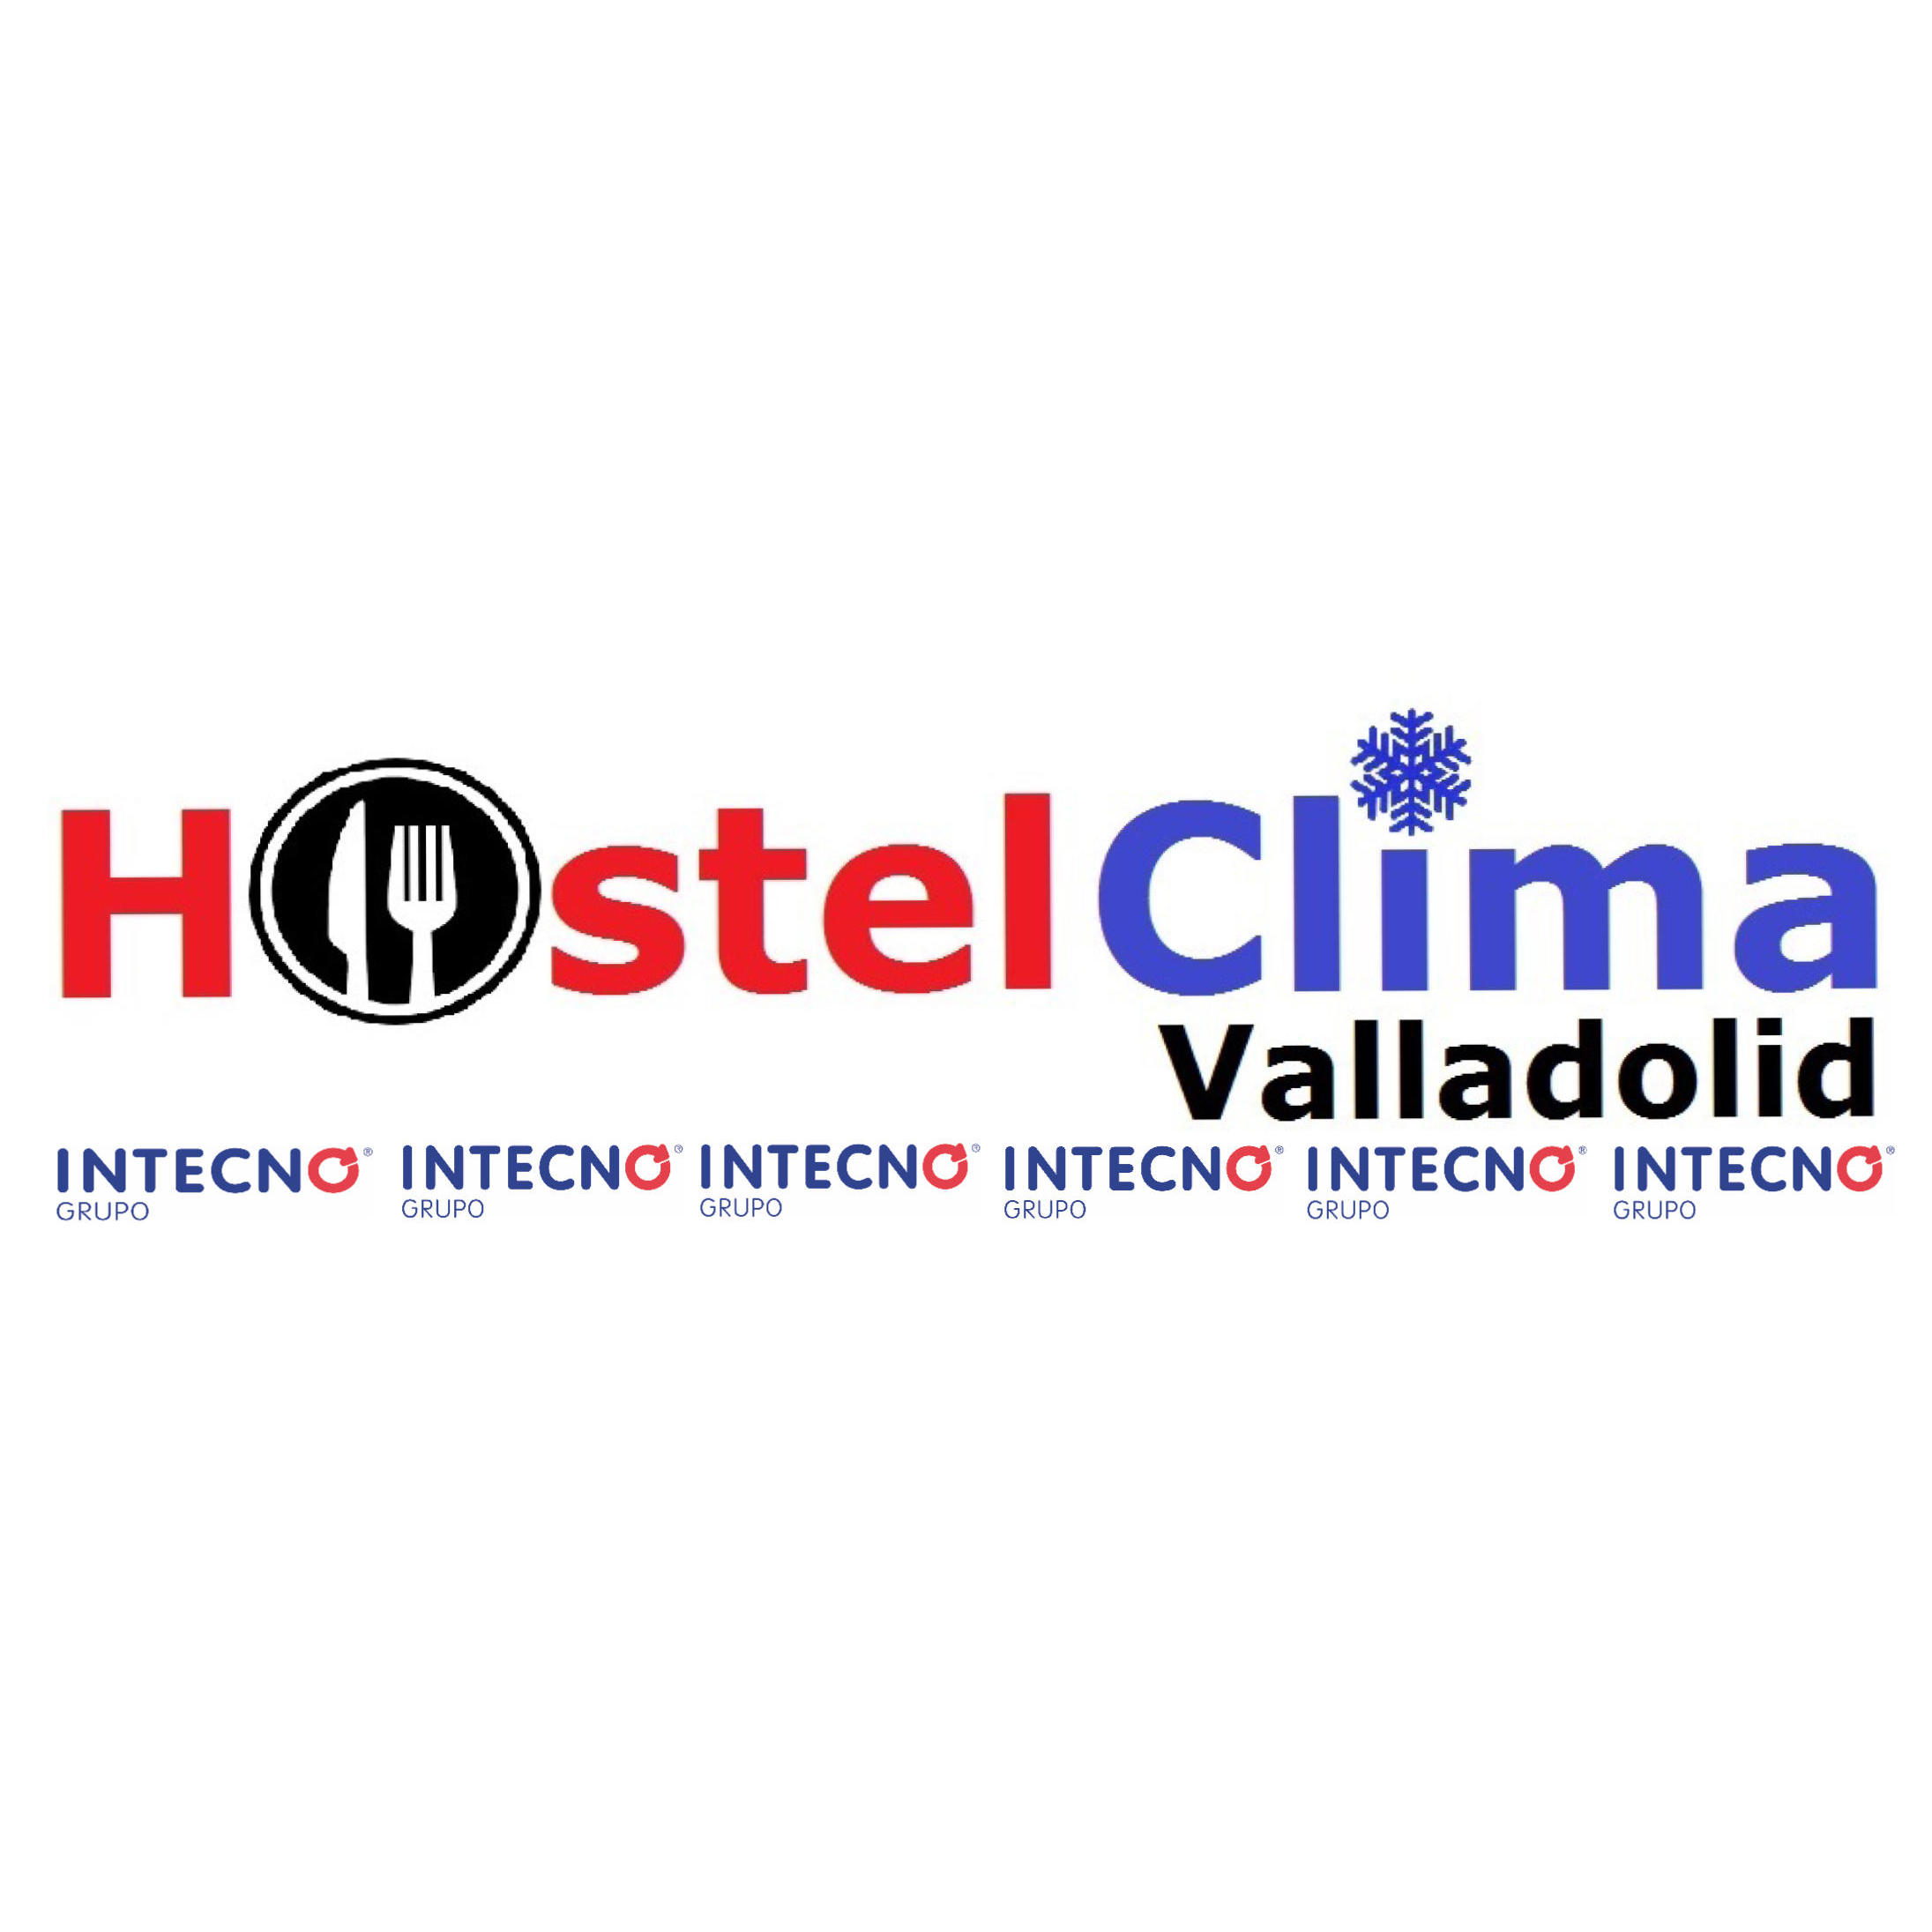 Hostelclima Valladolid Logo